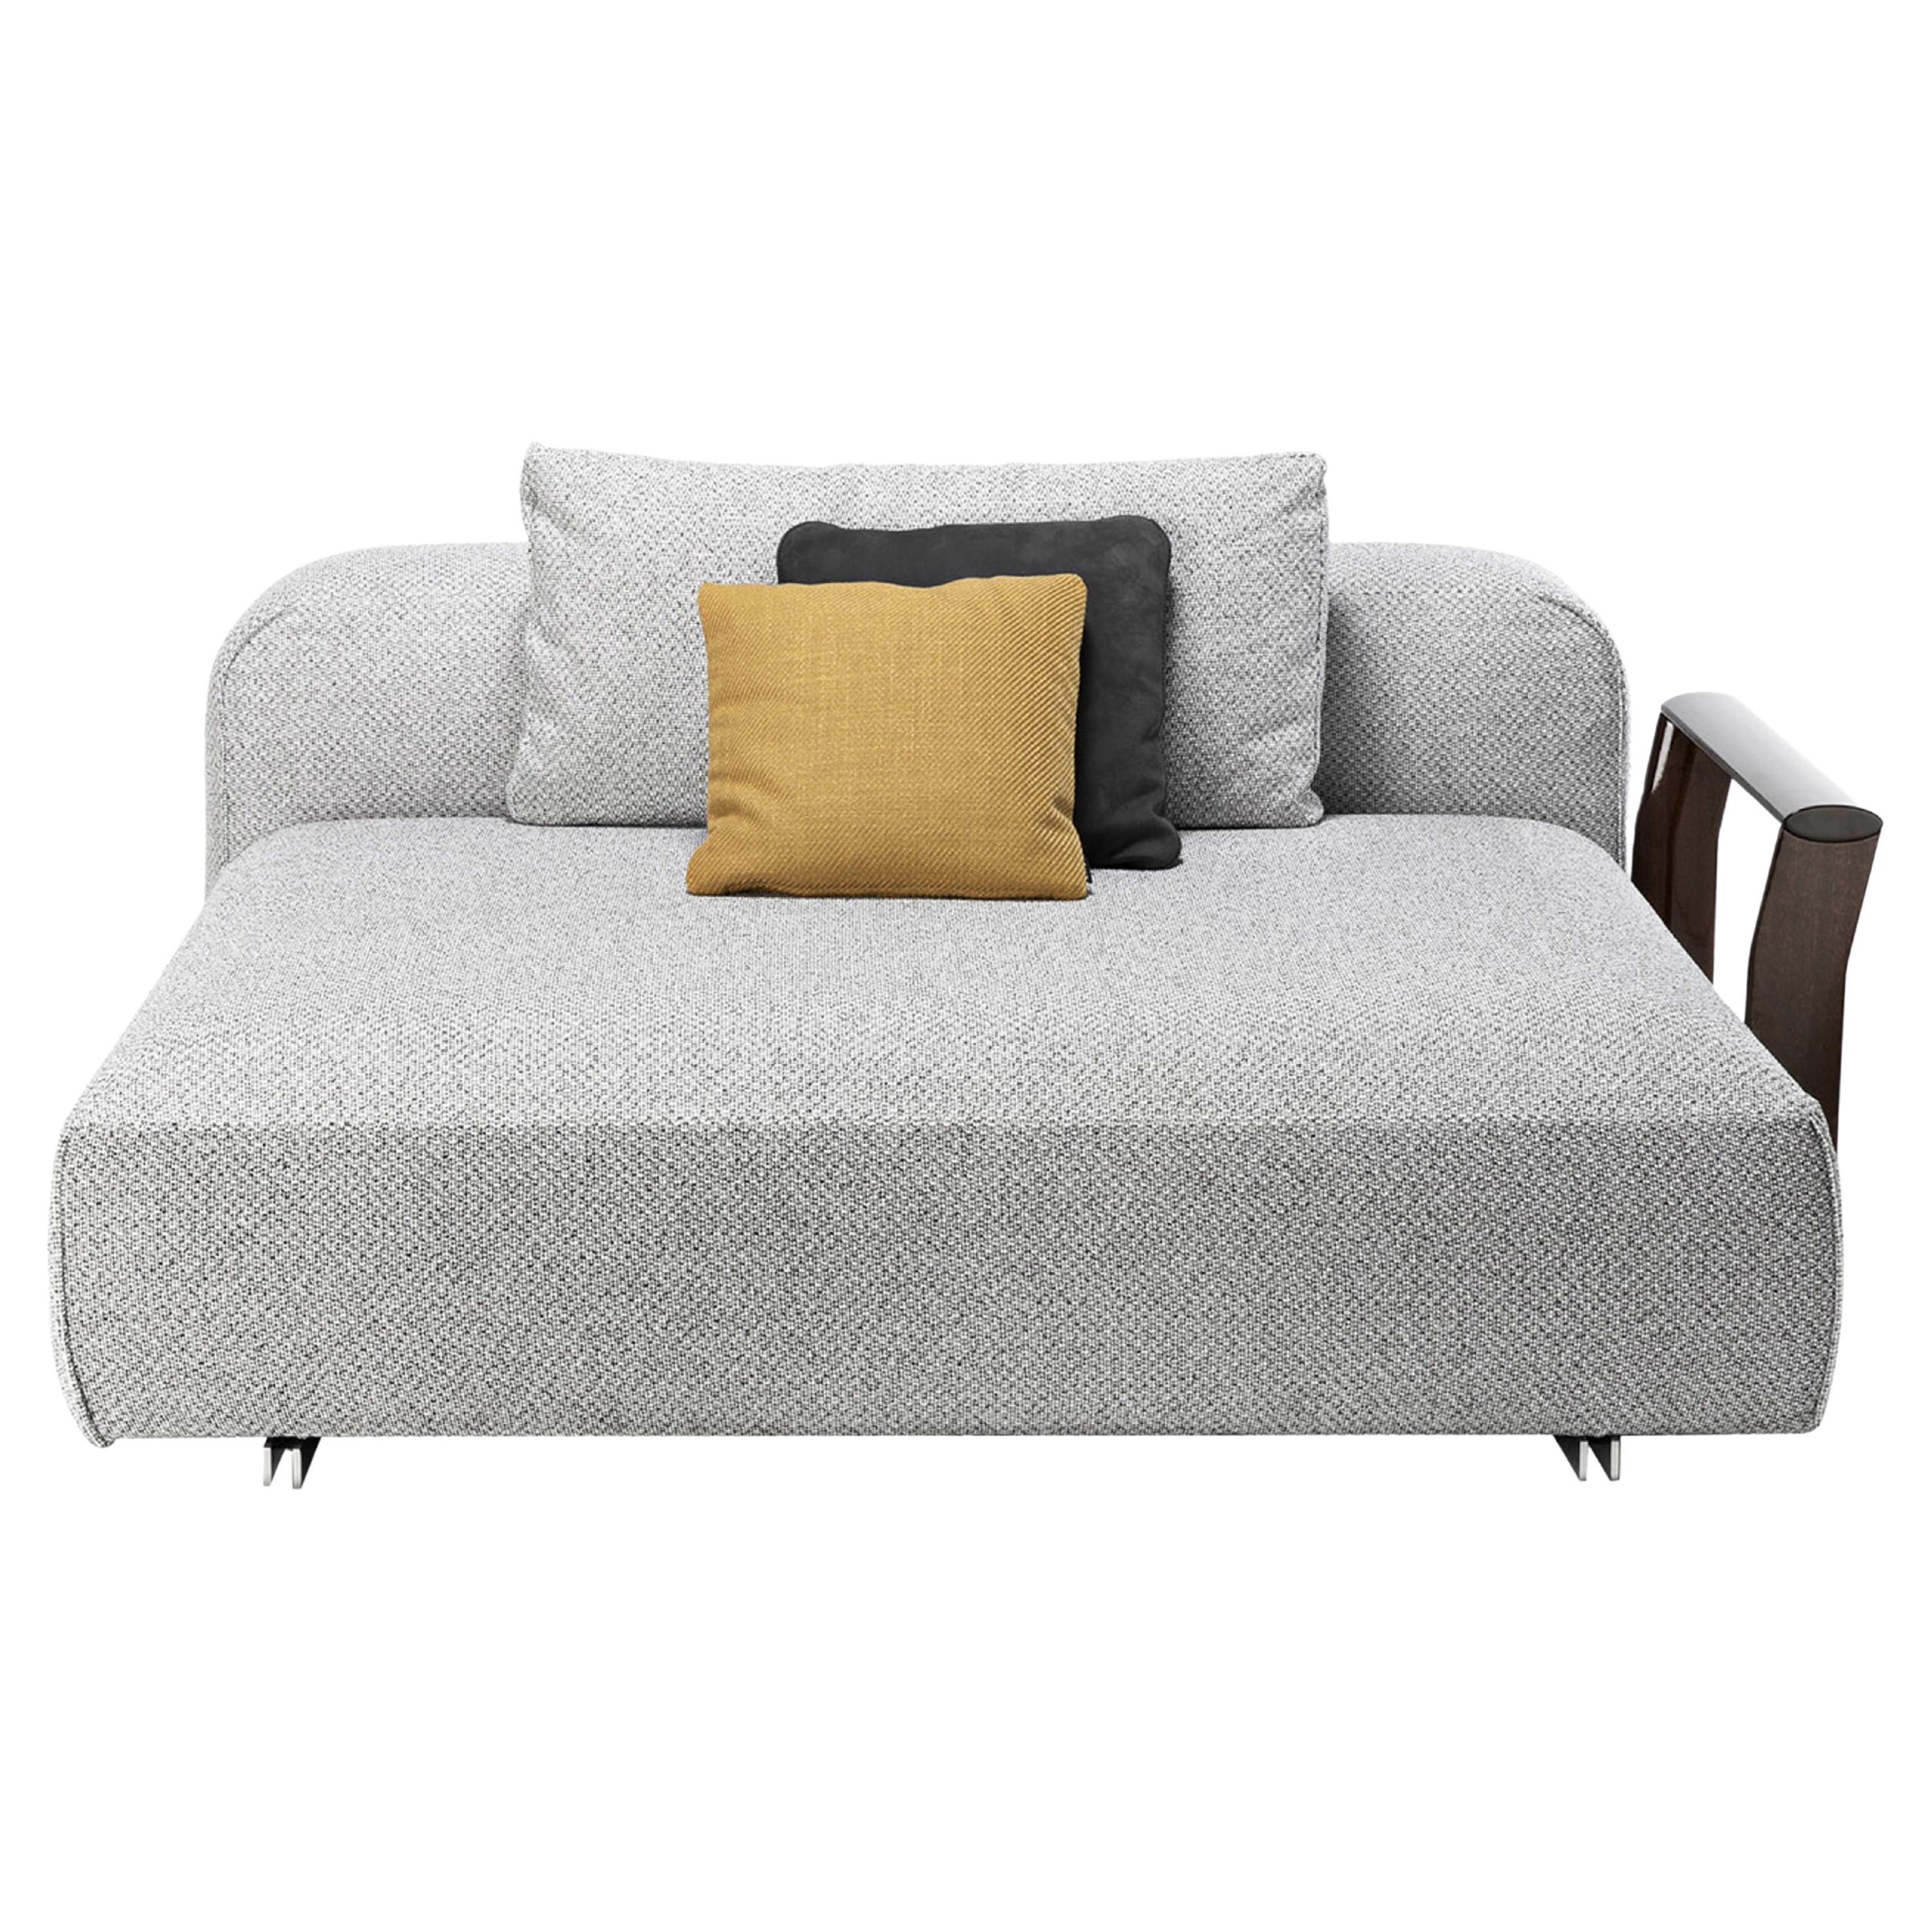 Elba Modular Barrique + Gray Lounge Seat by Massimo Castagna